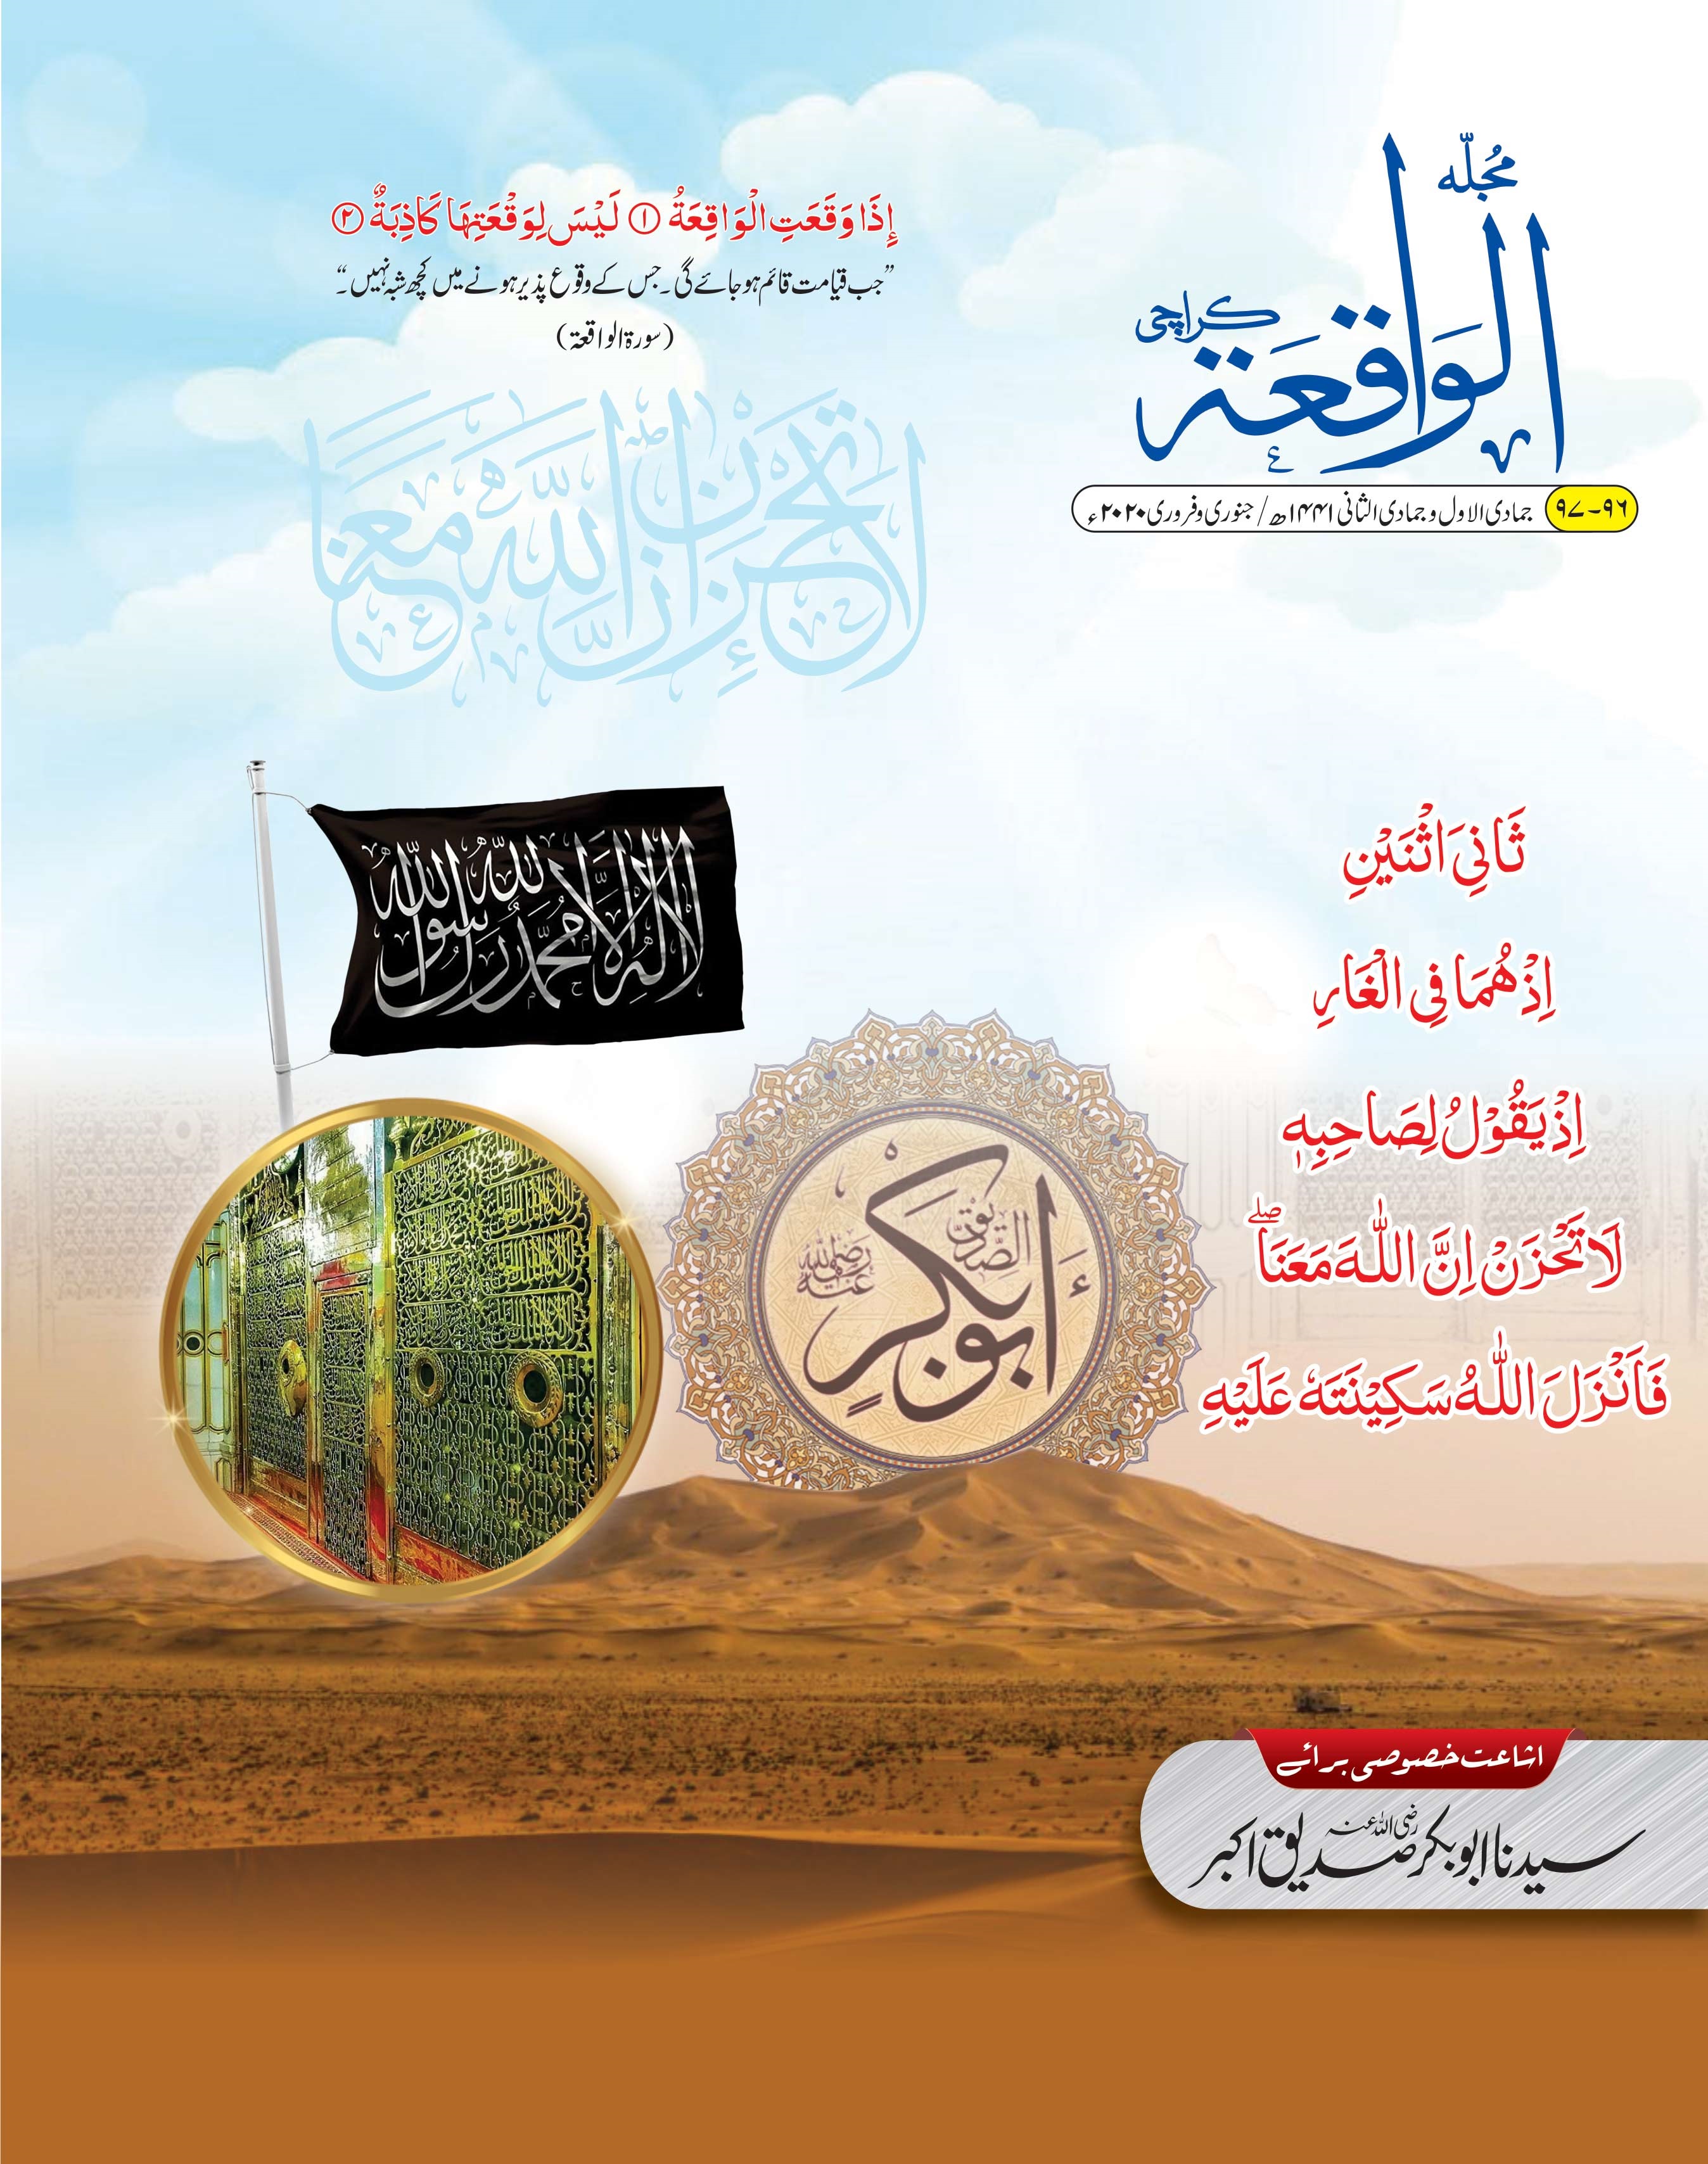 Syedna Siddiq e Akbar (R.A) – Al-Waqia Magazine (Special Edition)